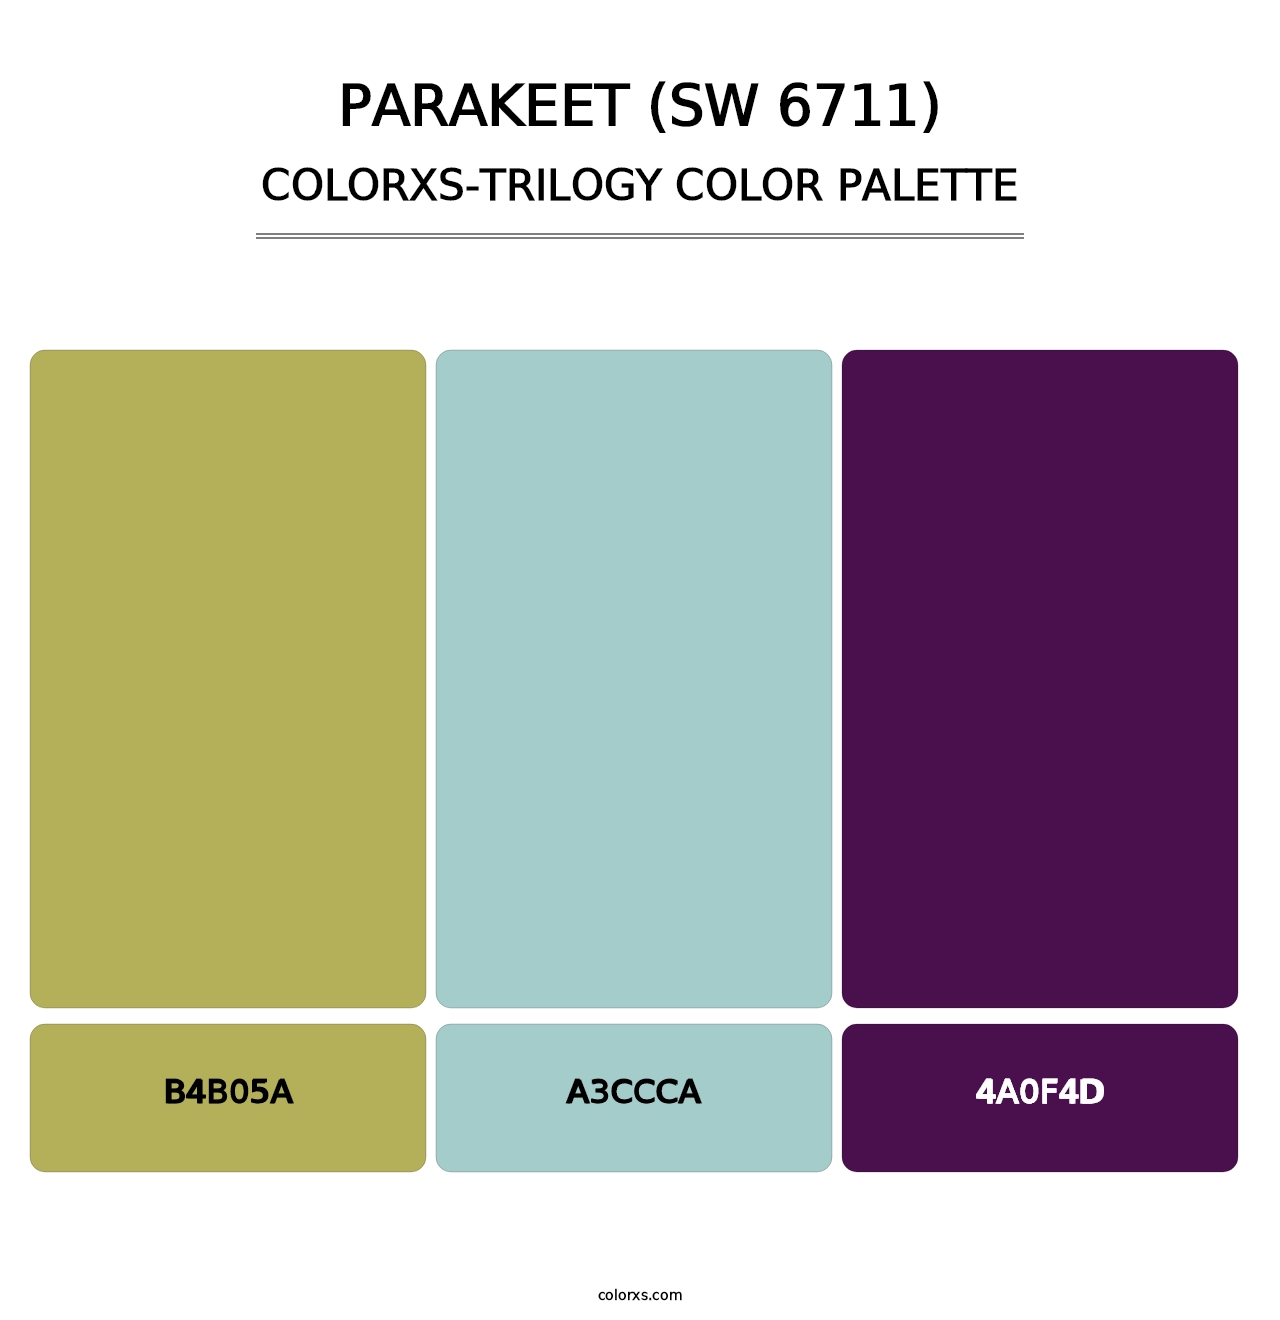 Parakeet (SW 6711) - Colorxs Trilogy Palette